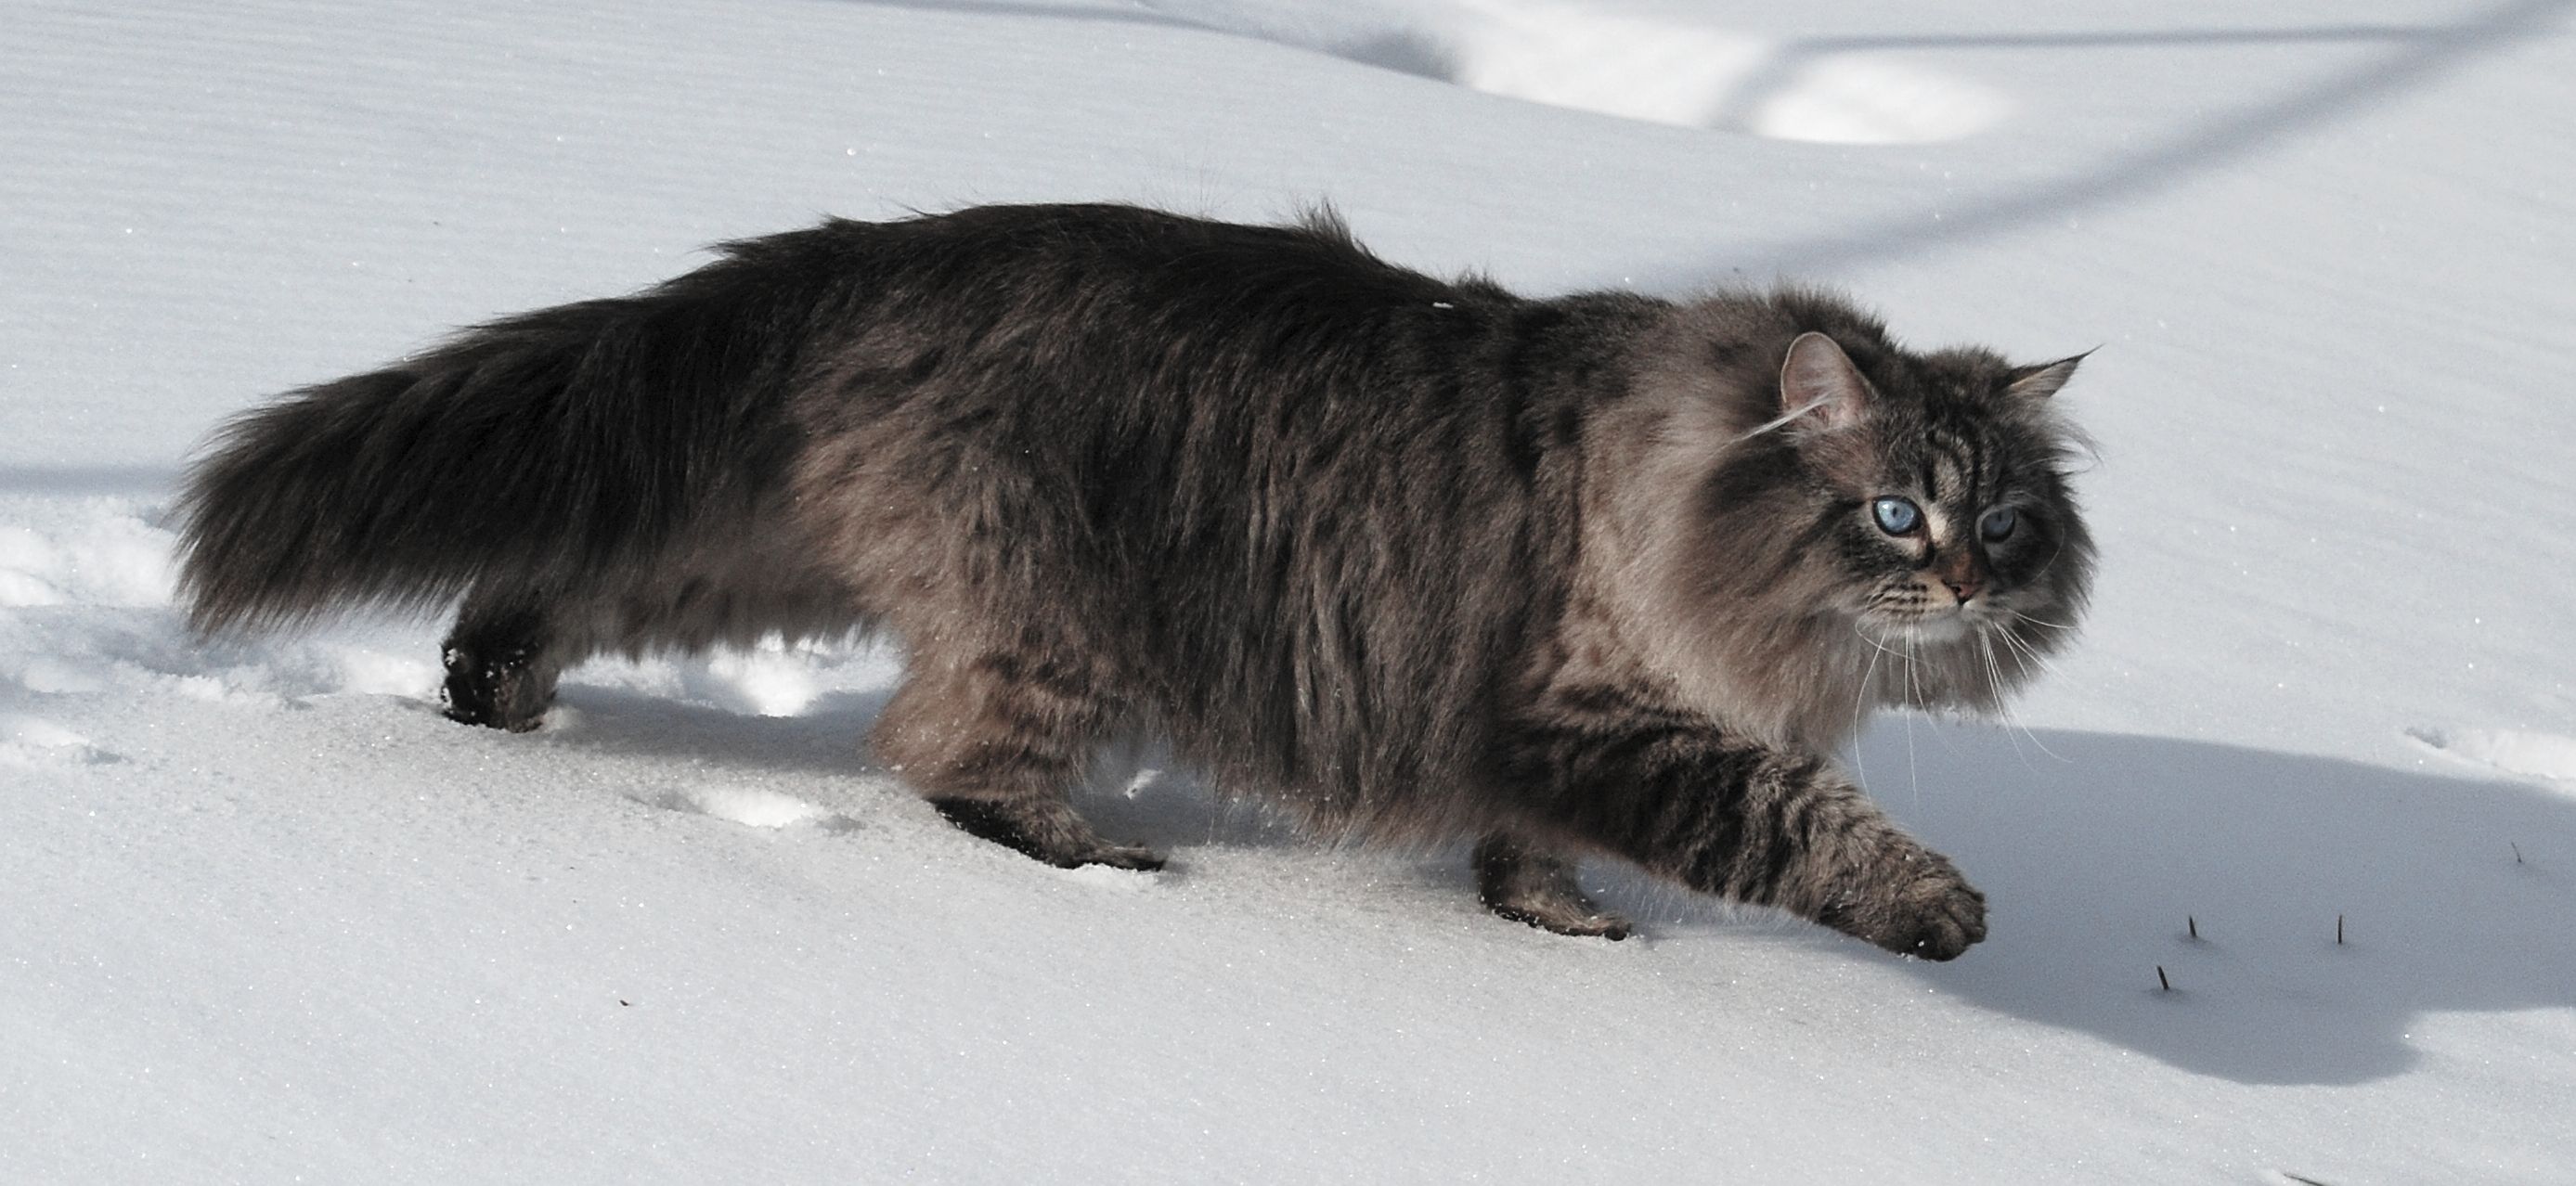 Siberian cat walking in the snow